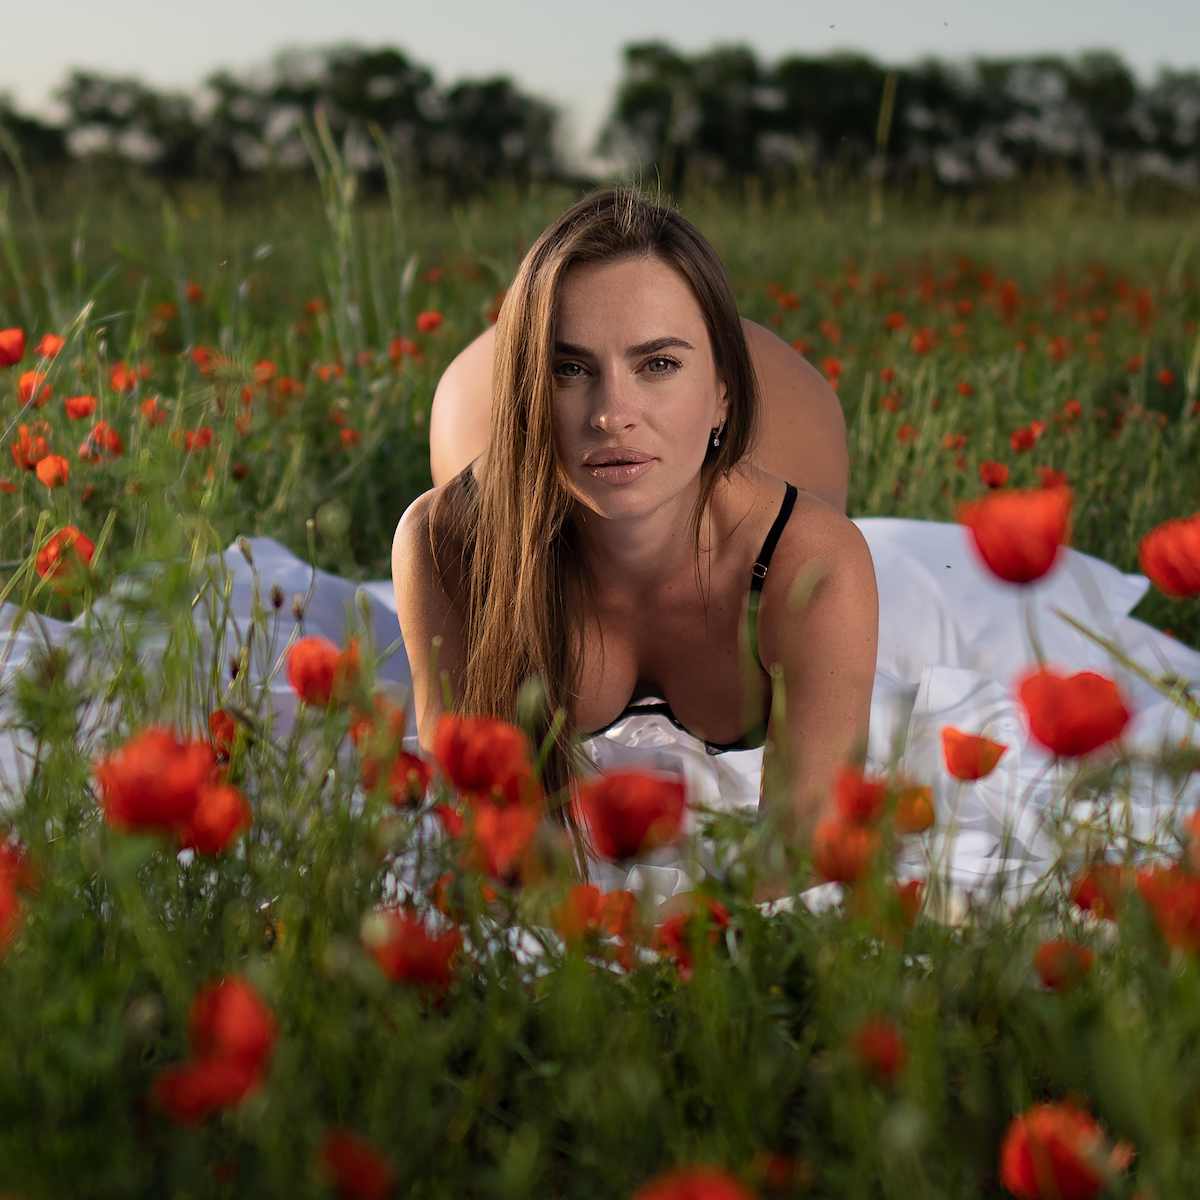 Photo Shoot in Poppies - Veronika Loshkareva & Nurlan Ashimov Image 2